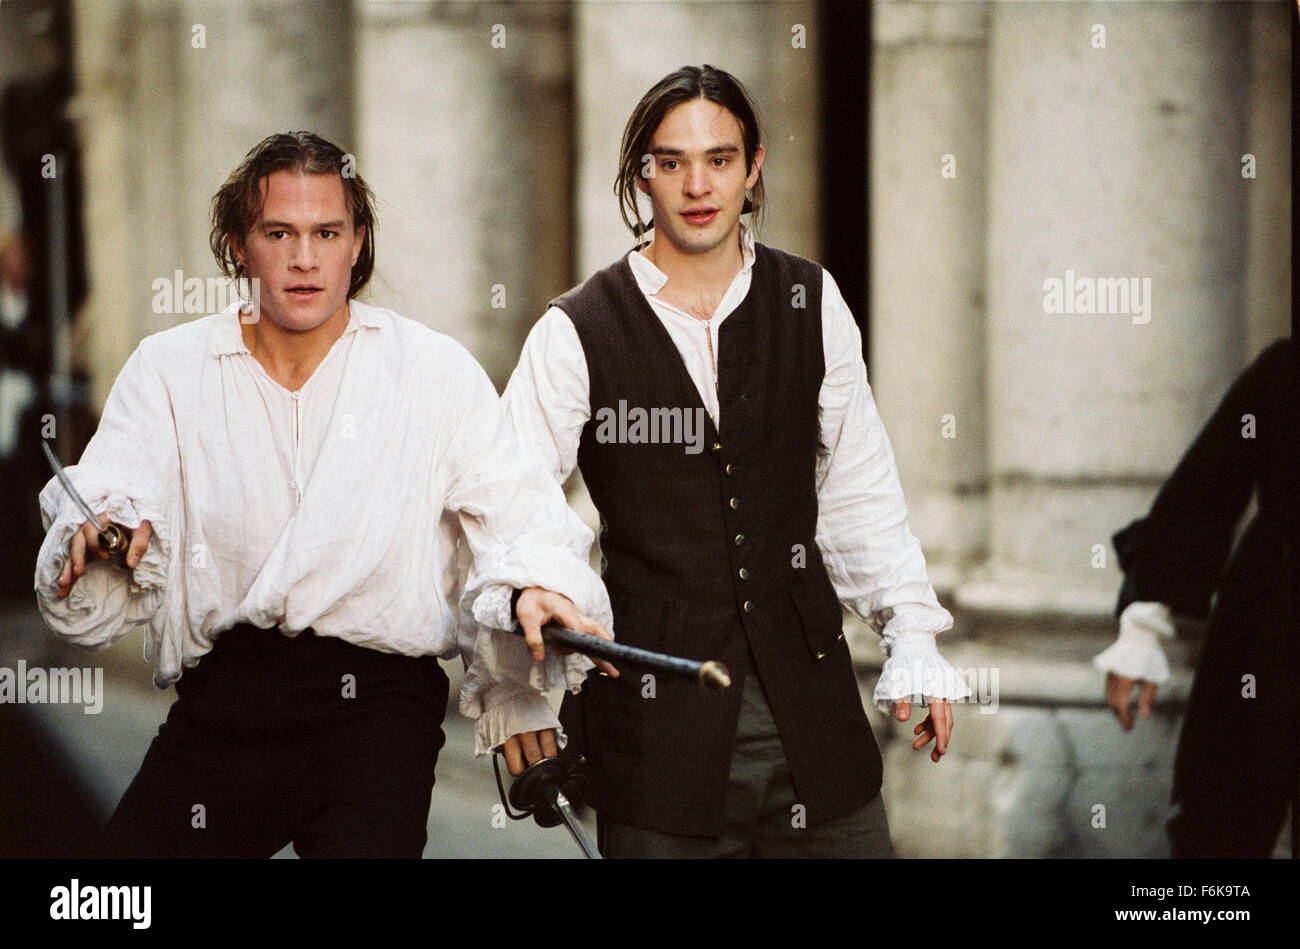 RELEASED: Sep 3, 2005 - Original Film Title: Casanova. PICTURED: HEATH LEDGER stars as Lord Jacomo Casanova and CHARLIE COX as Giovanni Bruni. Stock Photo